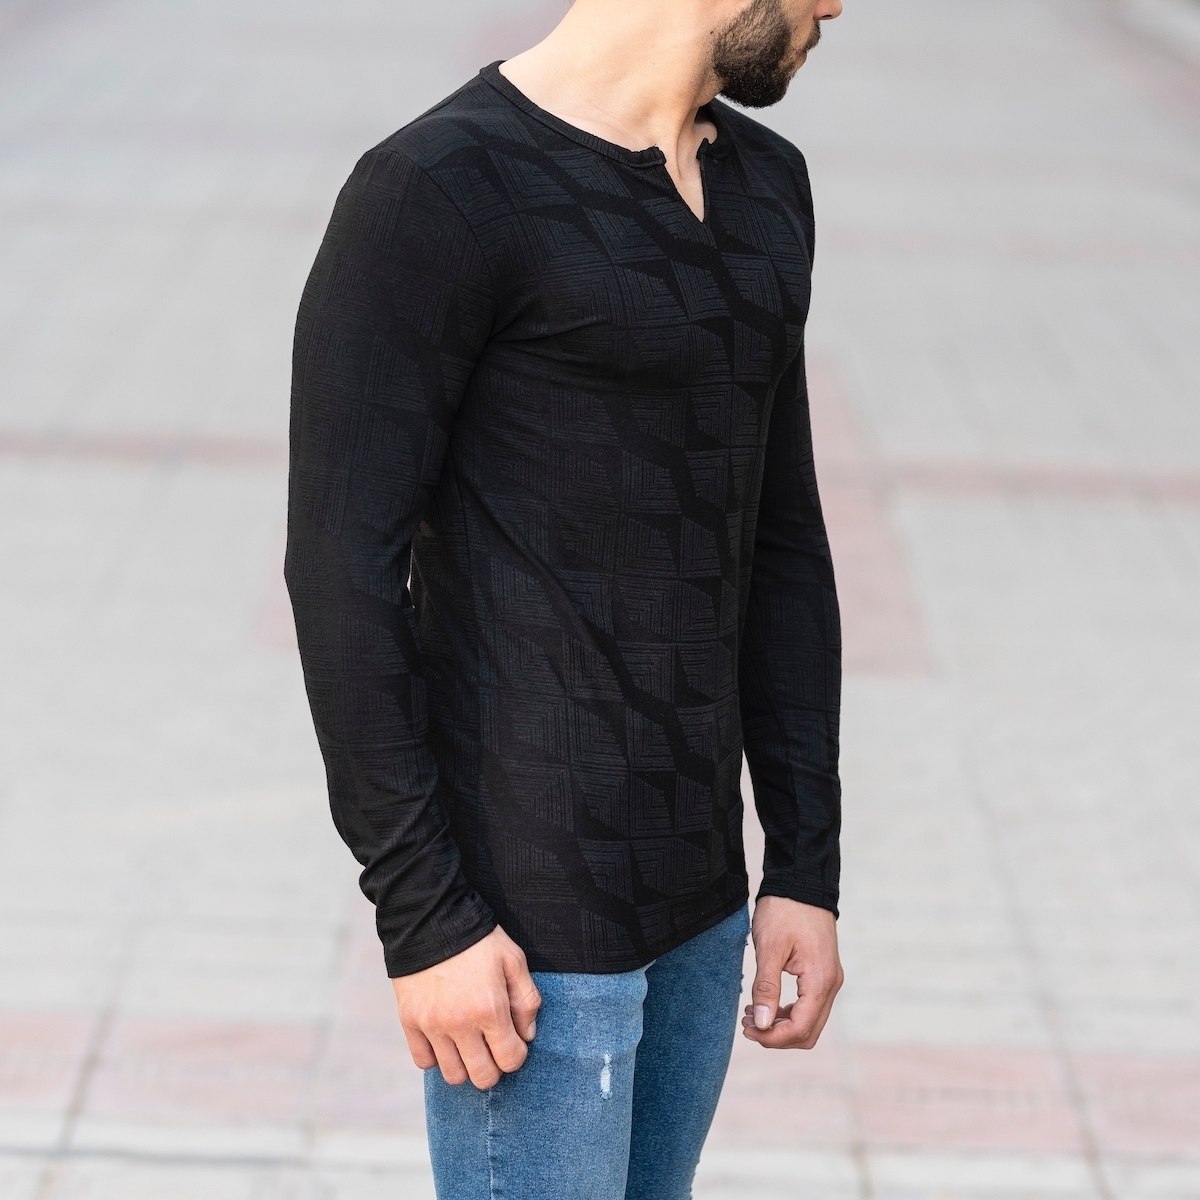 Herren Sweatshirt mit Muster Detail in schwarz - 2